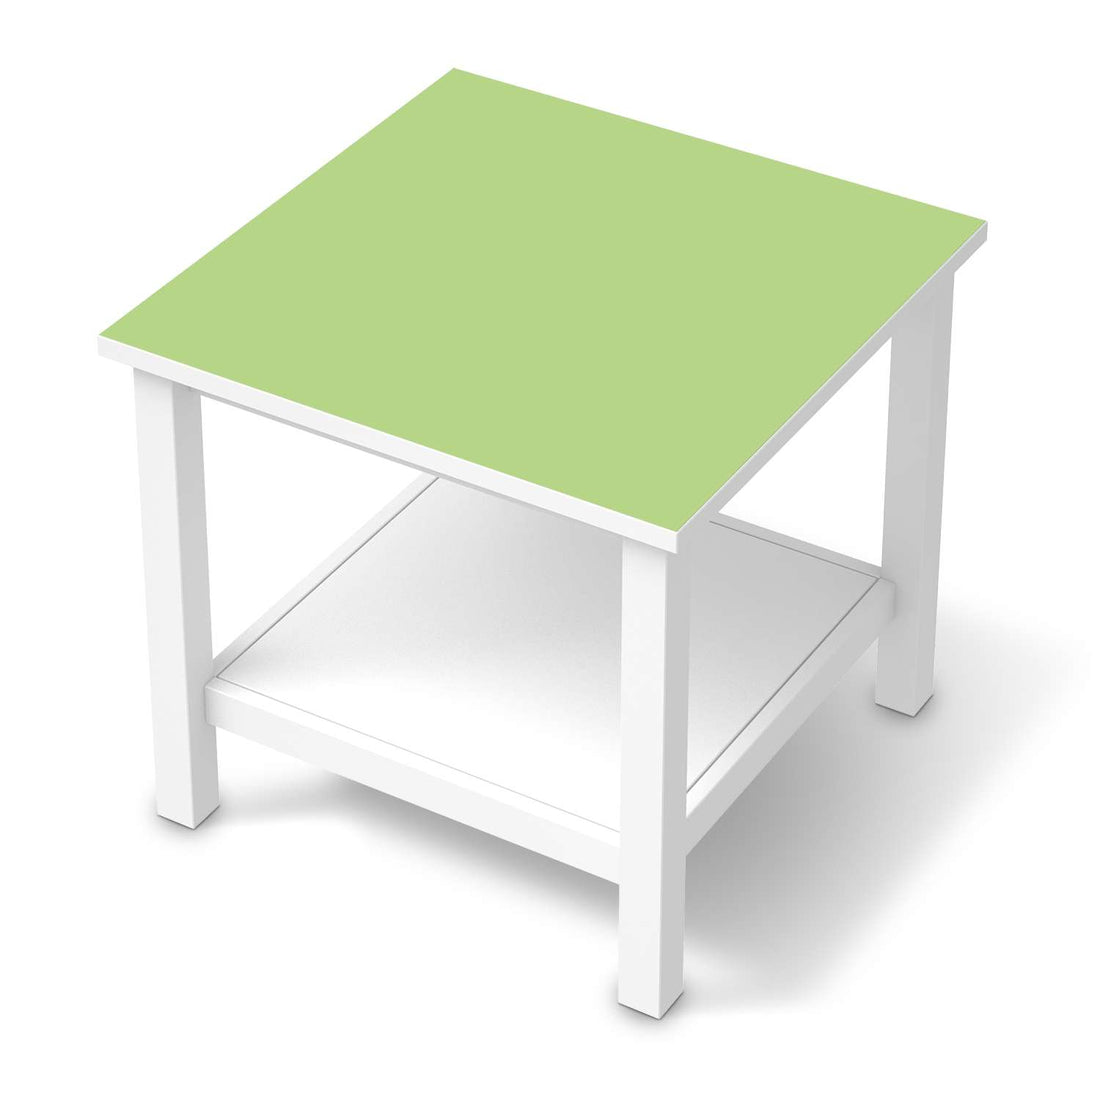 Möbel Klebefolie Hellgrün Light - IKEA Hemnes Beistelltisch 55x55 cm  - weiss